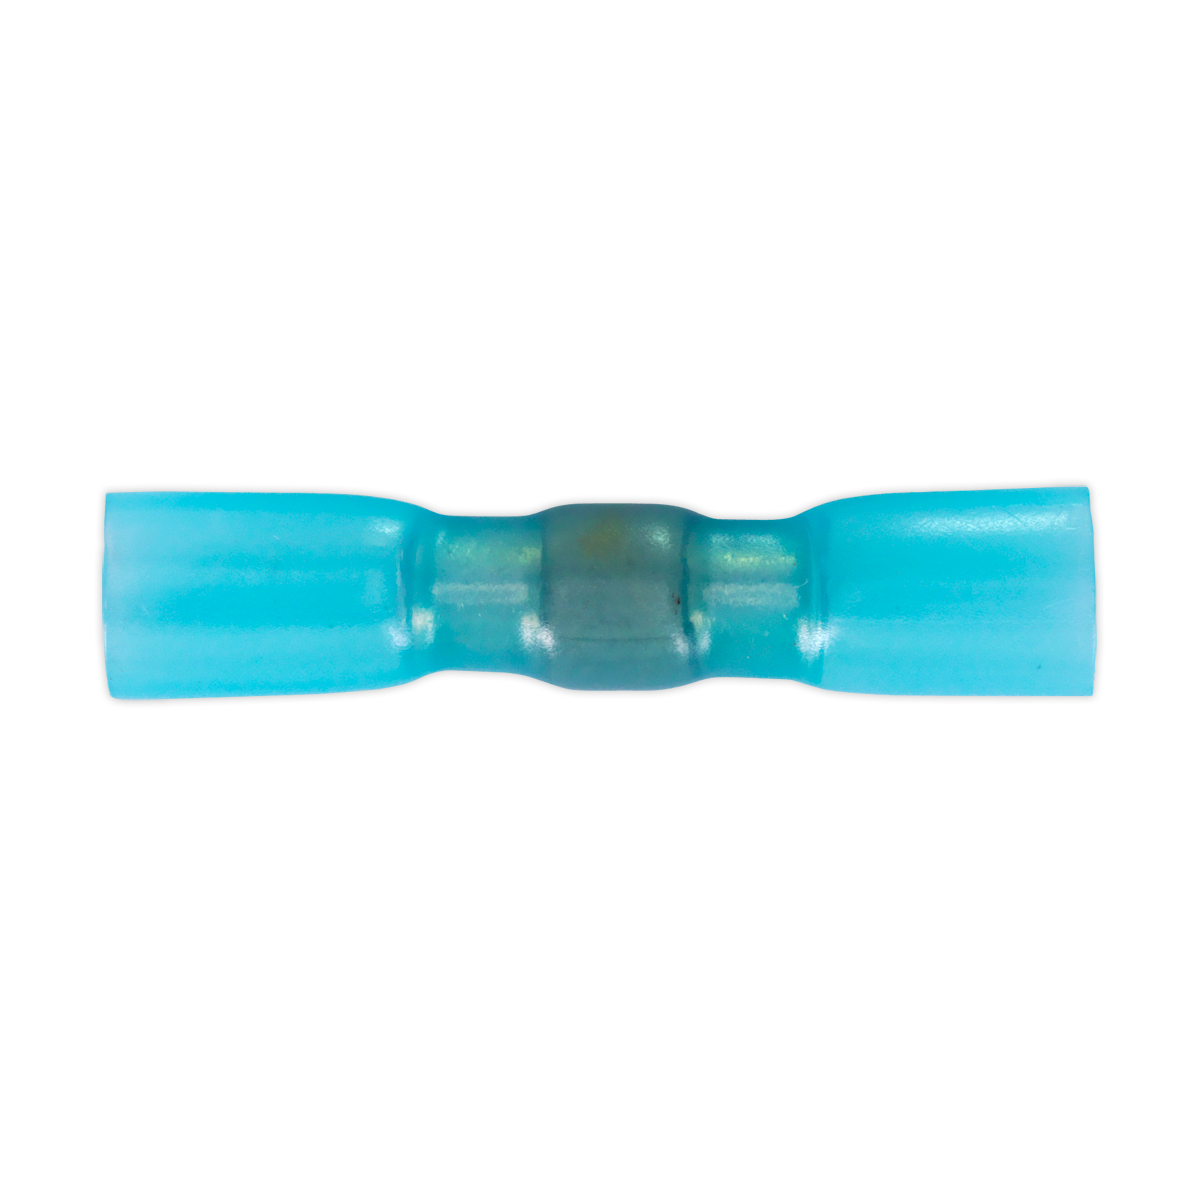 Sealey Heat Shrink Butt Connector with Crimp & Solder Blue Pack of 25